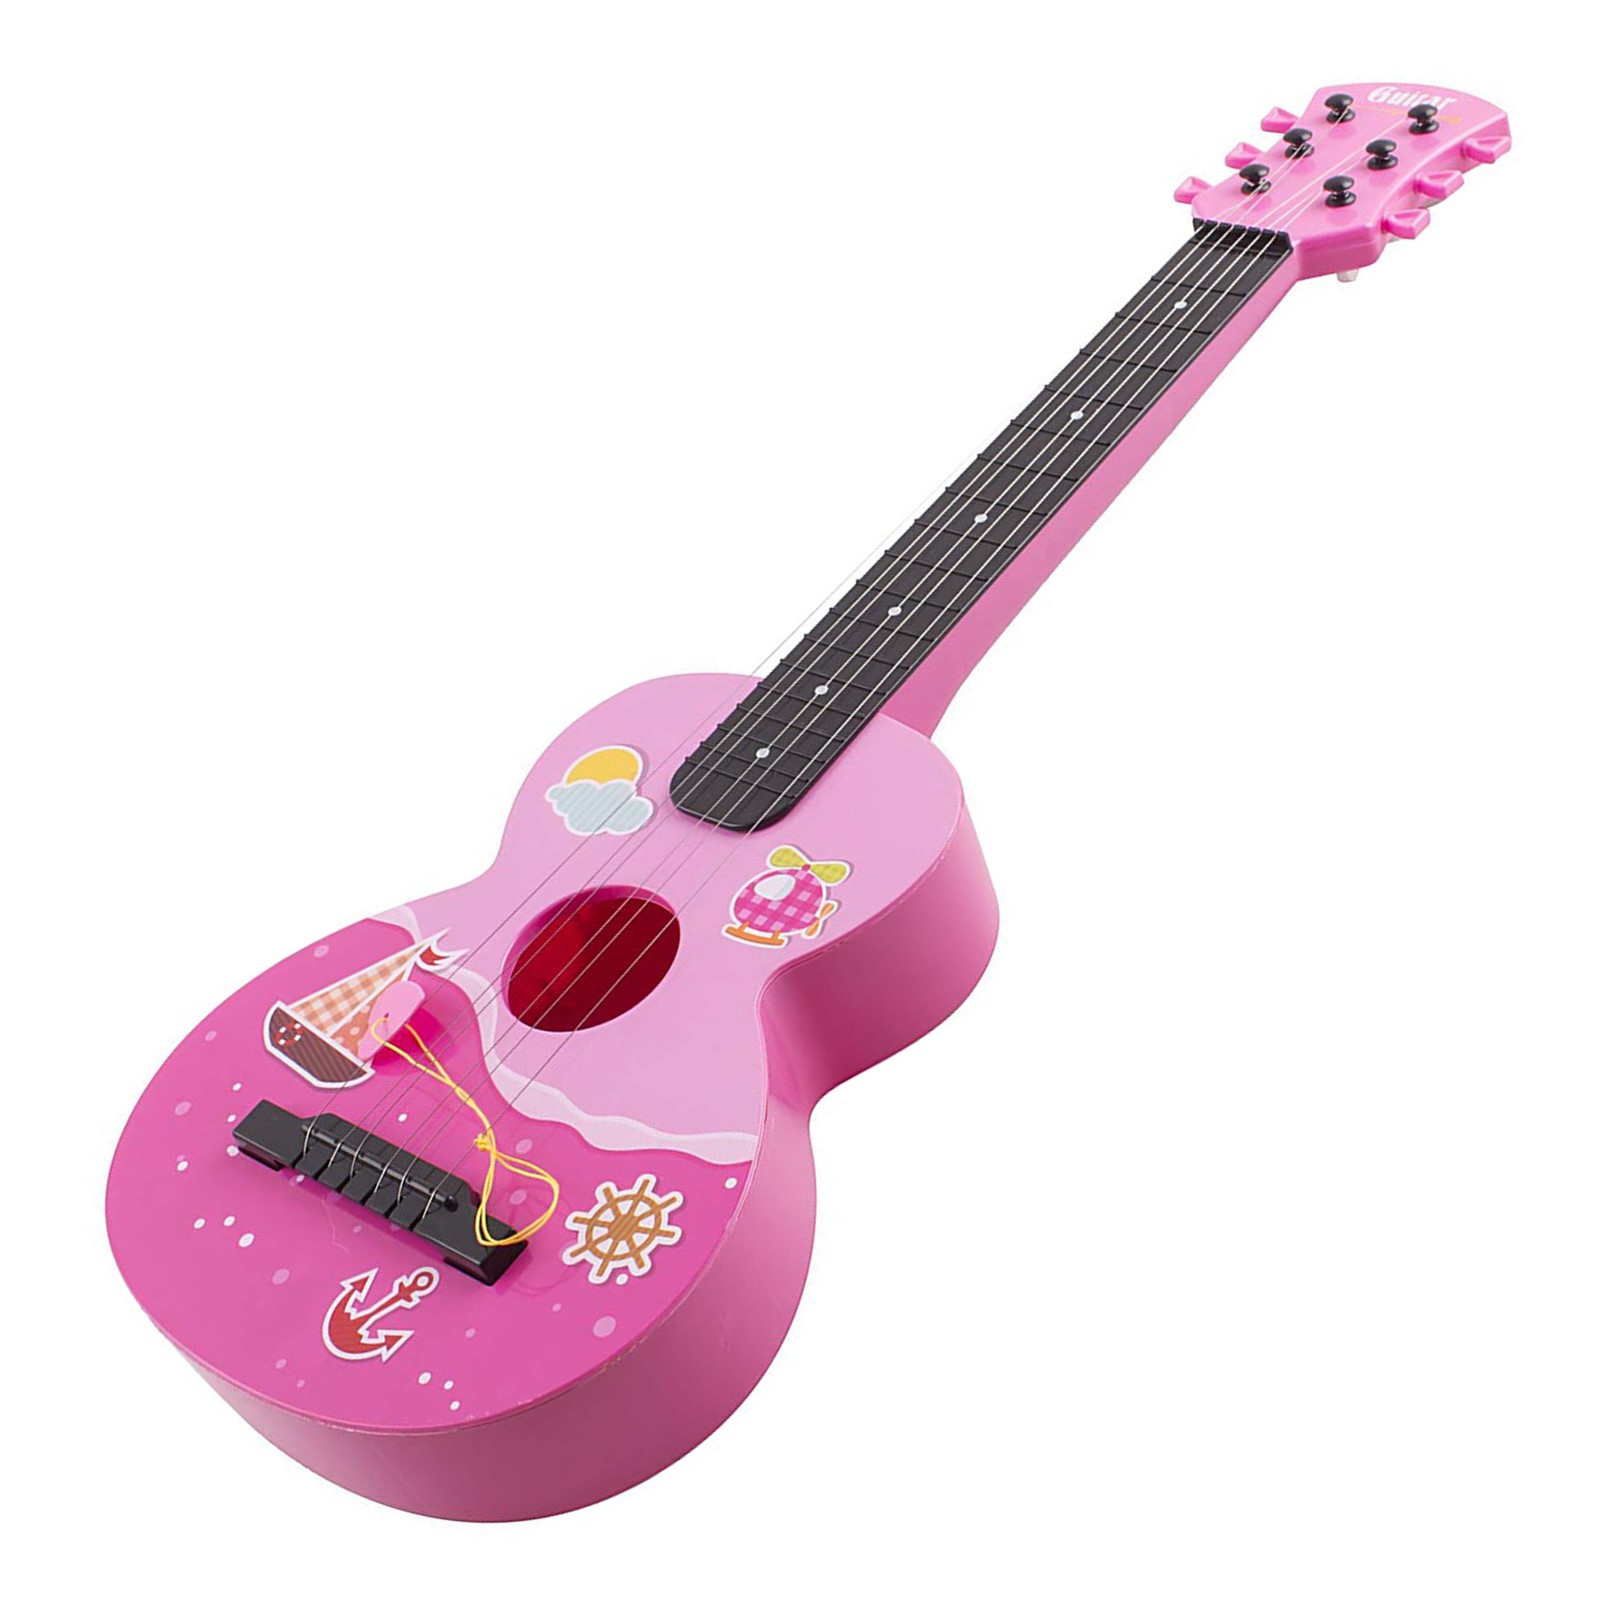 Toy Guitar Rock Star 6 String Acoustic Kids 25.5\" Ukulele With Guitar Pick Children\'s Musical Instrument Vibrant Sound Tunable Strings Educational And Perfect For Learning How To Play Pink Color